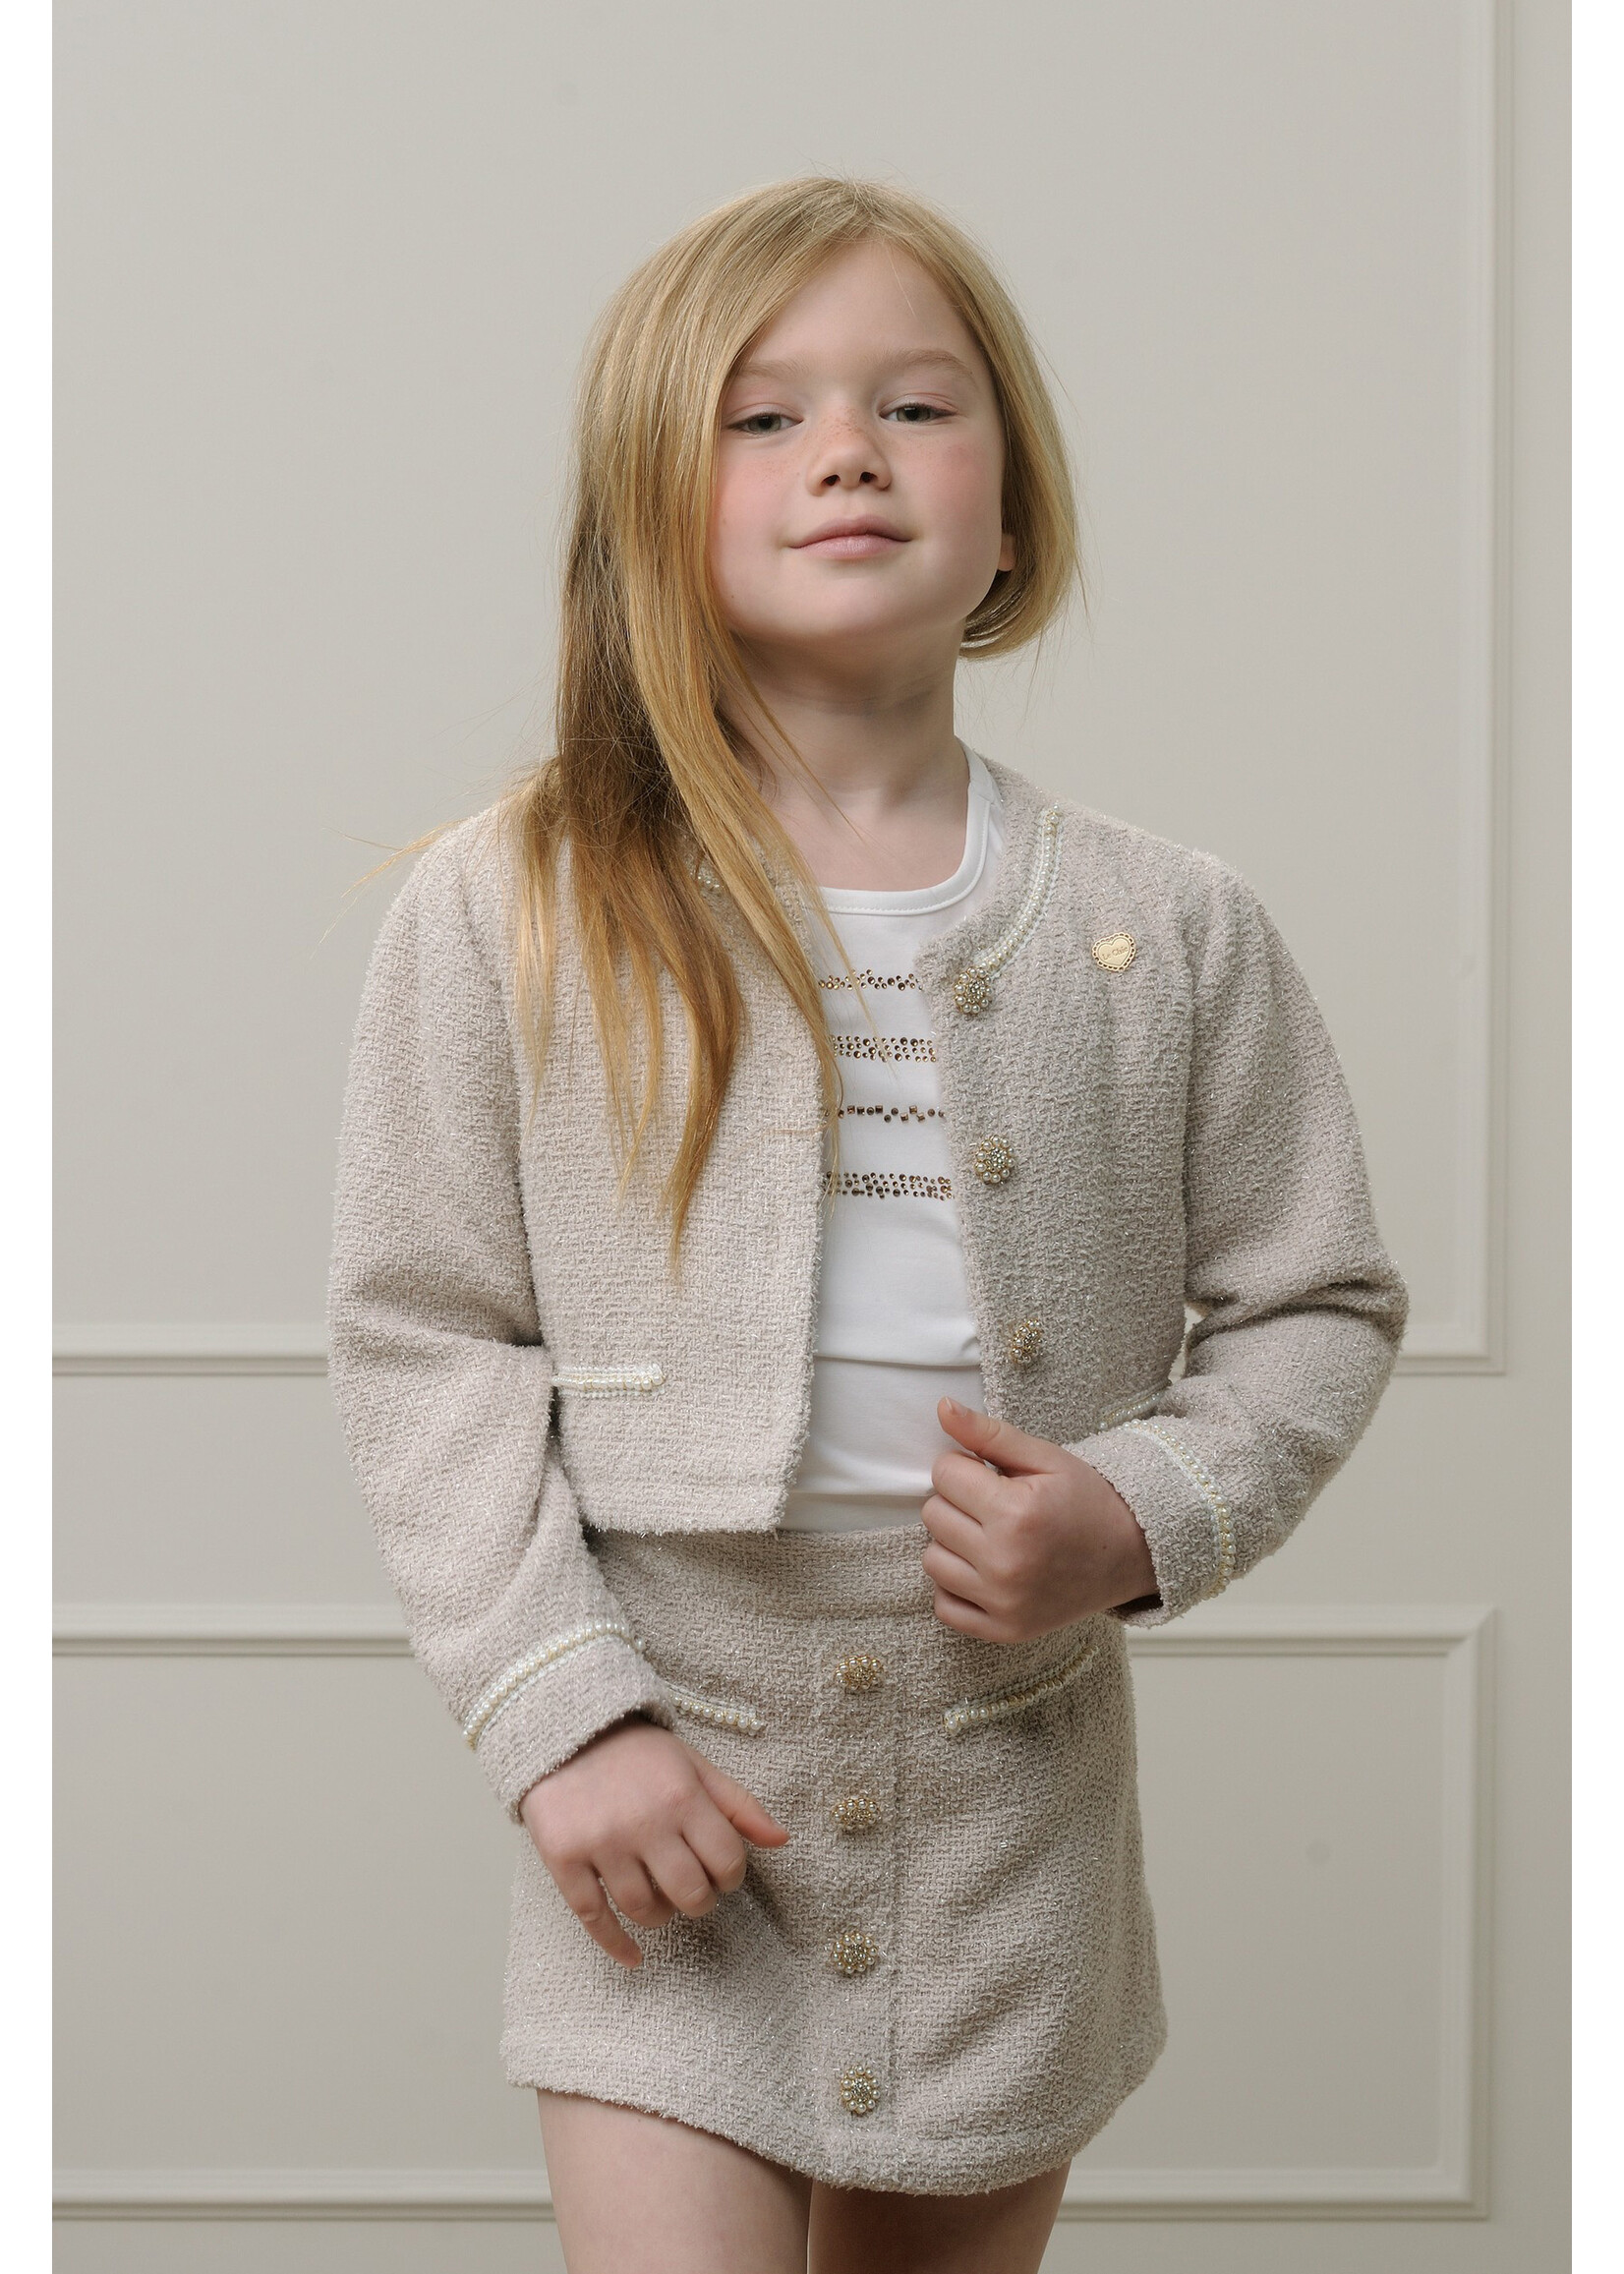 Le Chic Girls Kids C312-5142 AMY Chic tweed jacket Oatmeal Elite